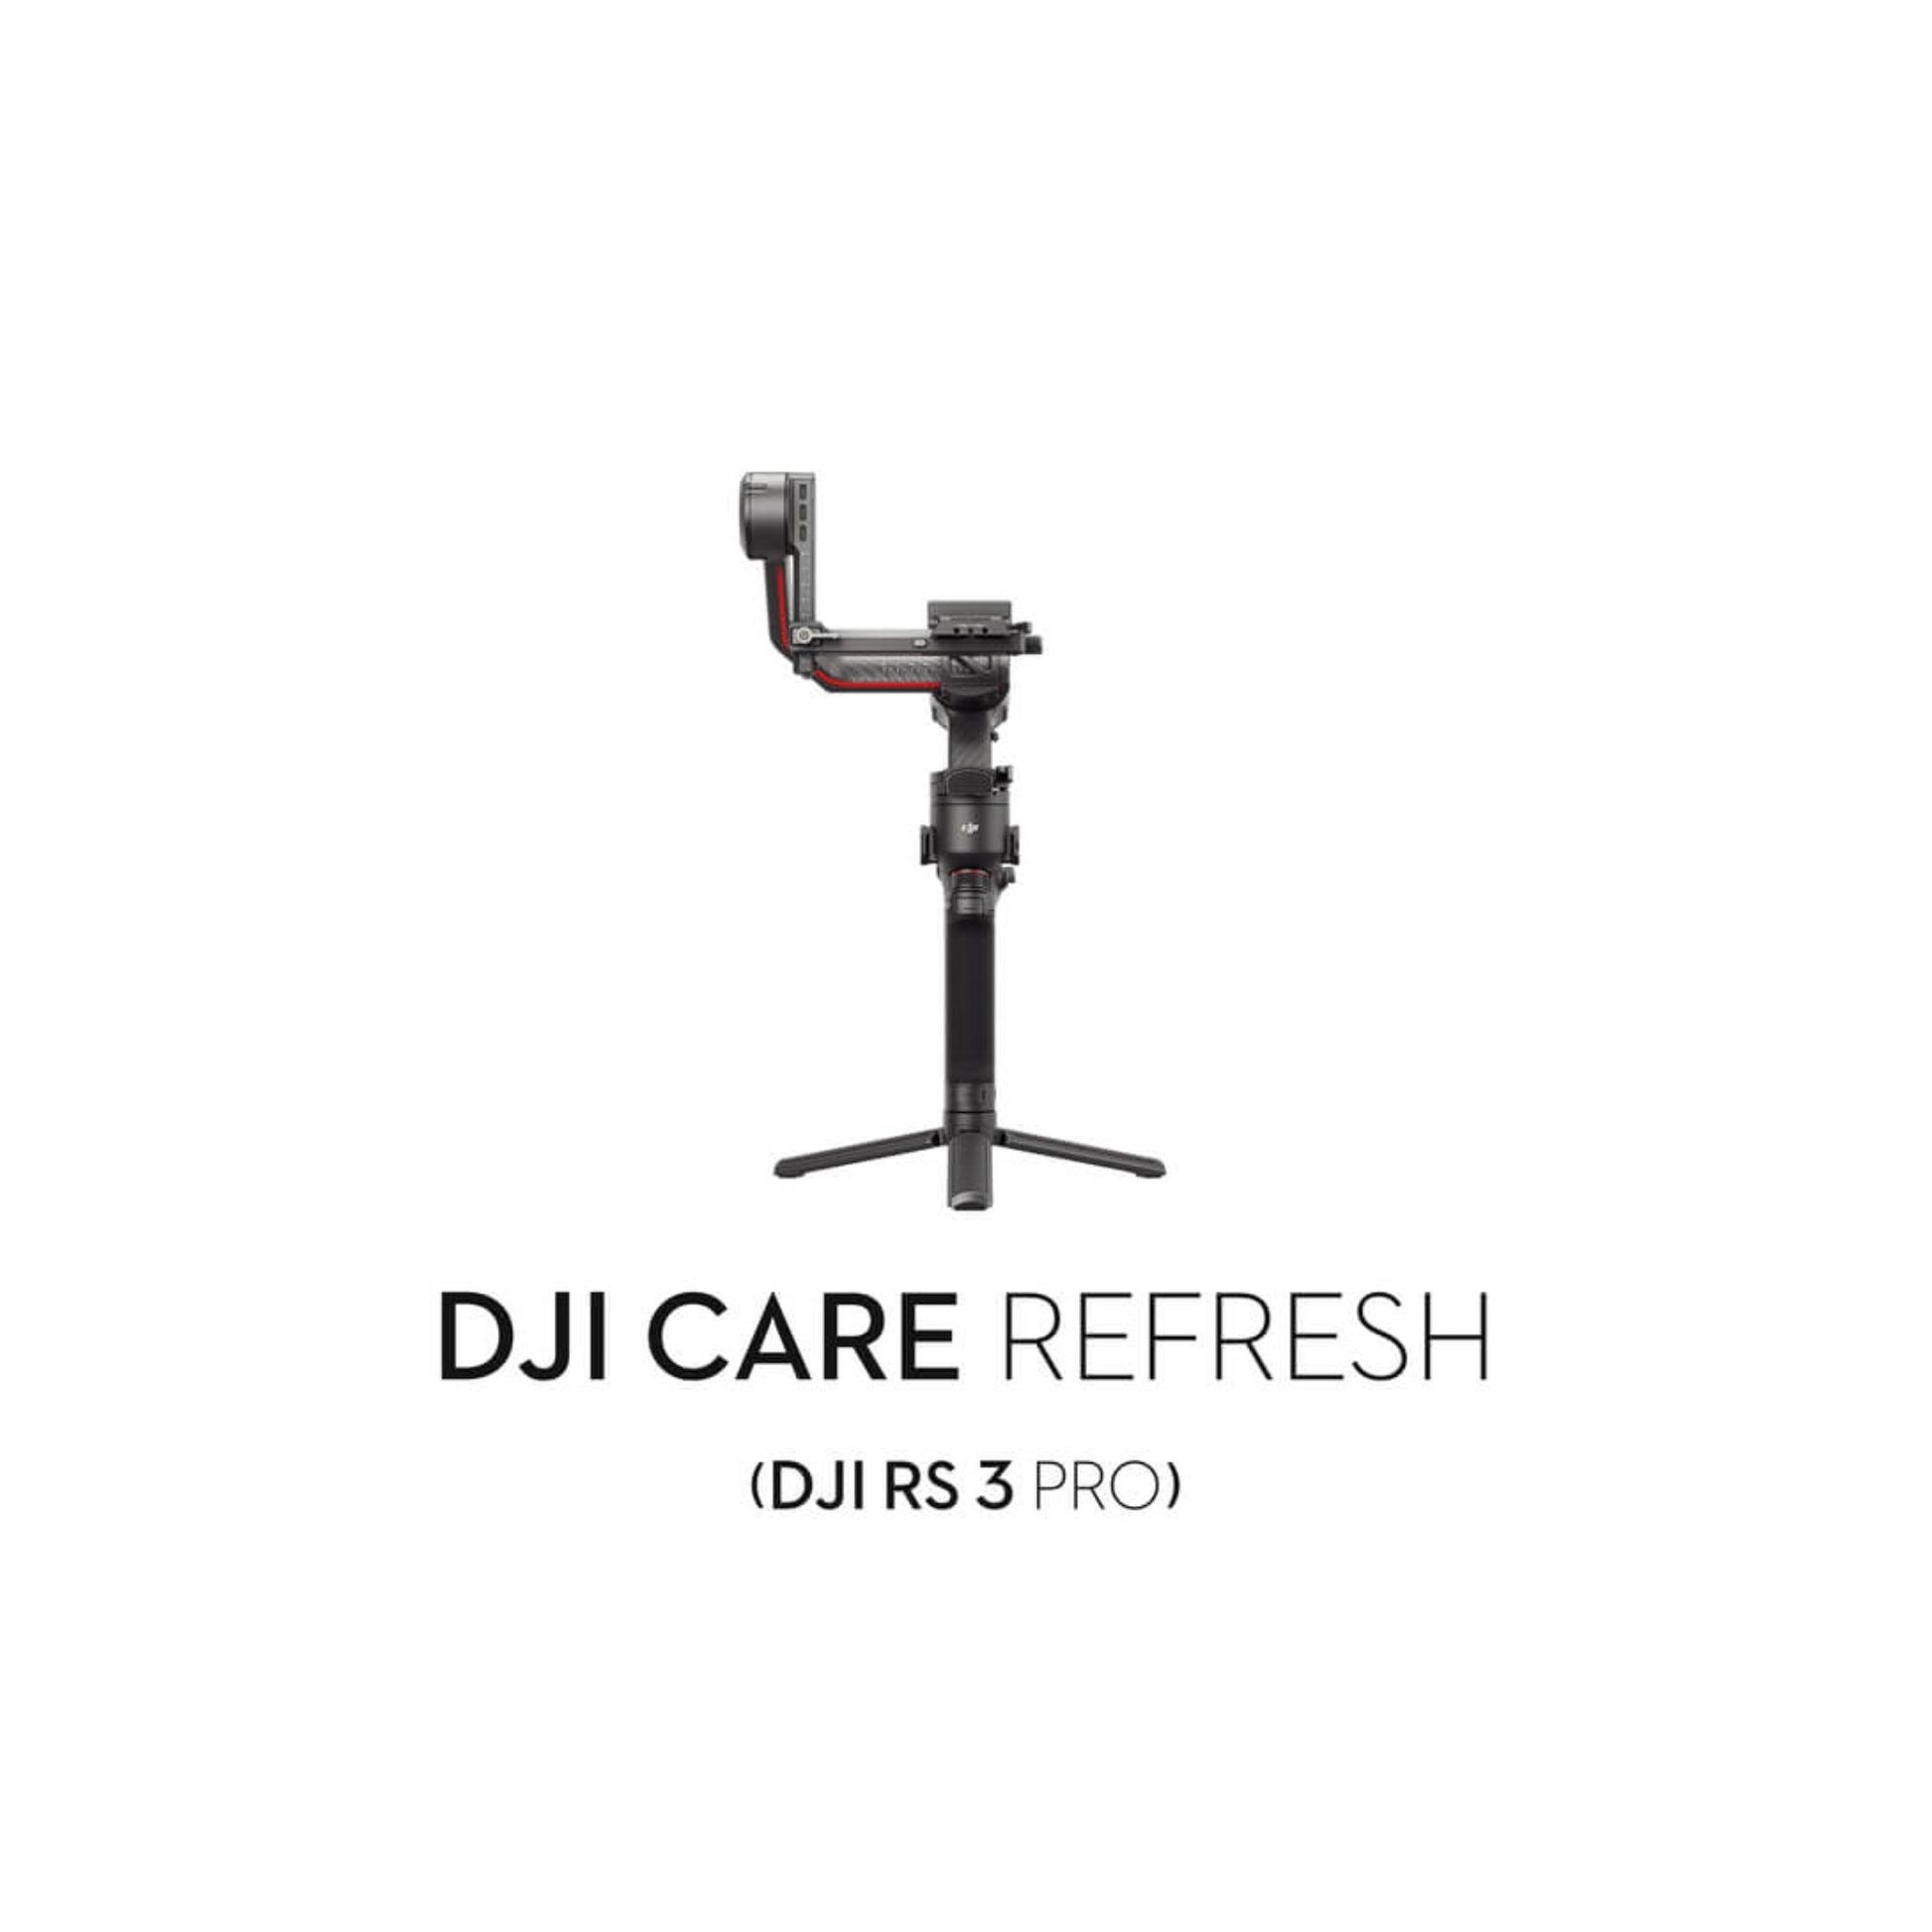 DJI Care Refresh 2-Year Plan (DJI RS 3 Pro) - Silverlight Optics